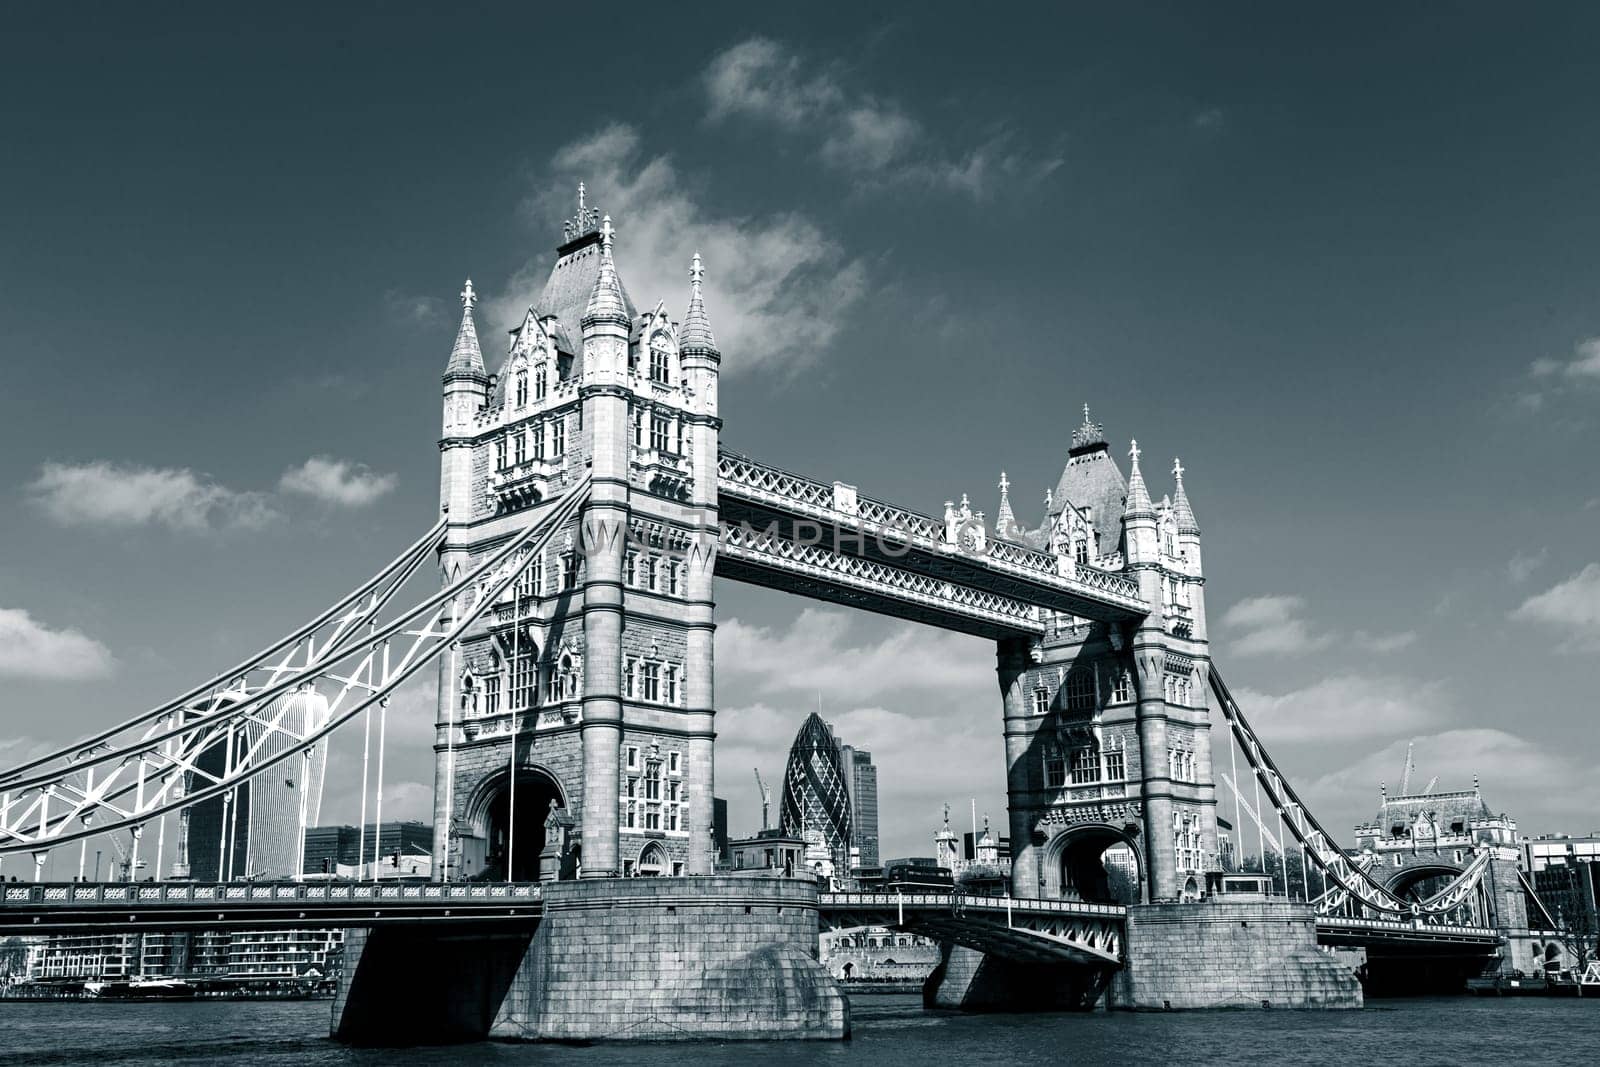 Tower Bridge in London, UK by kasto